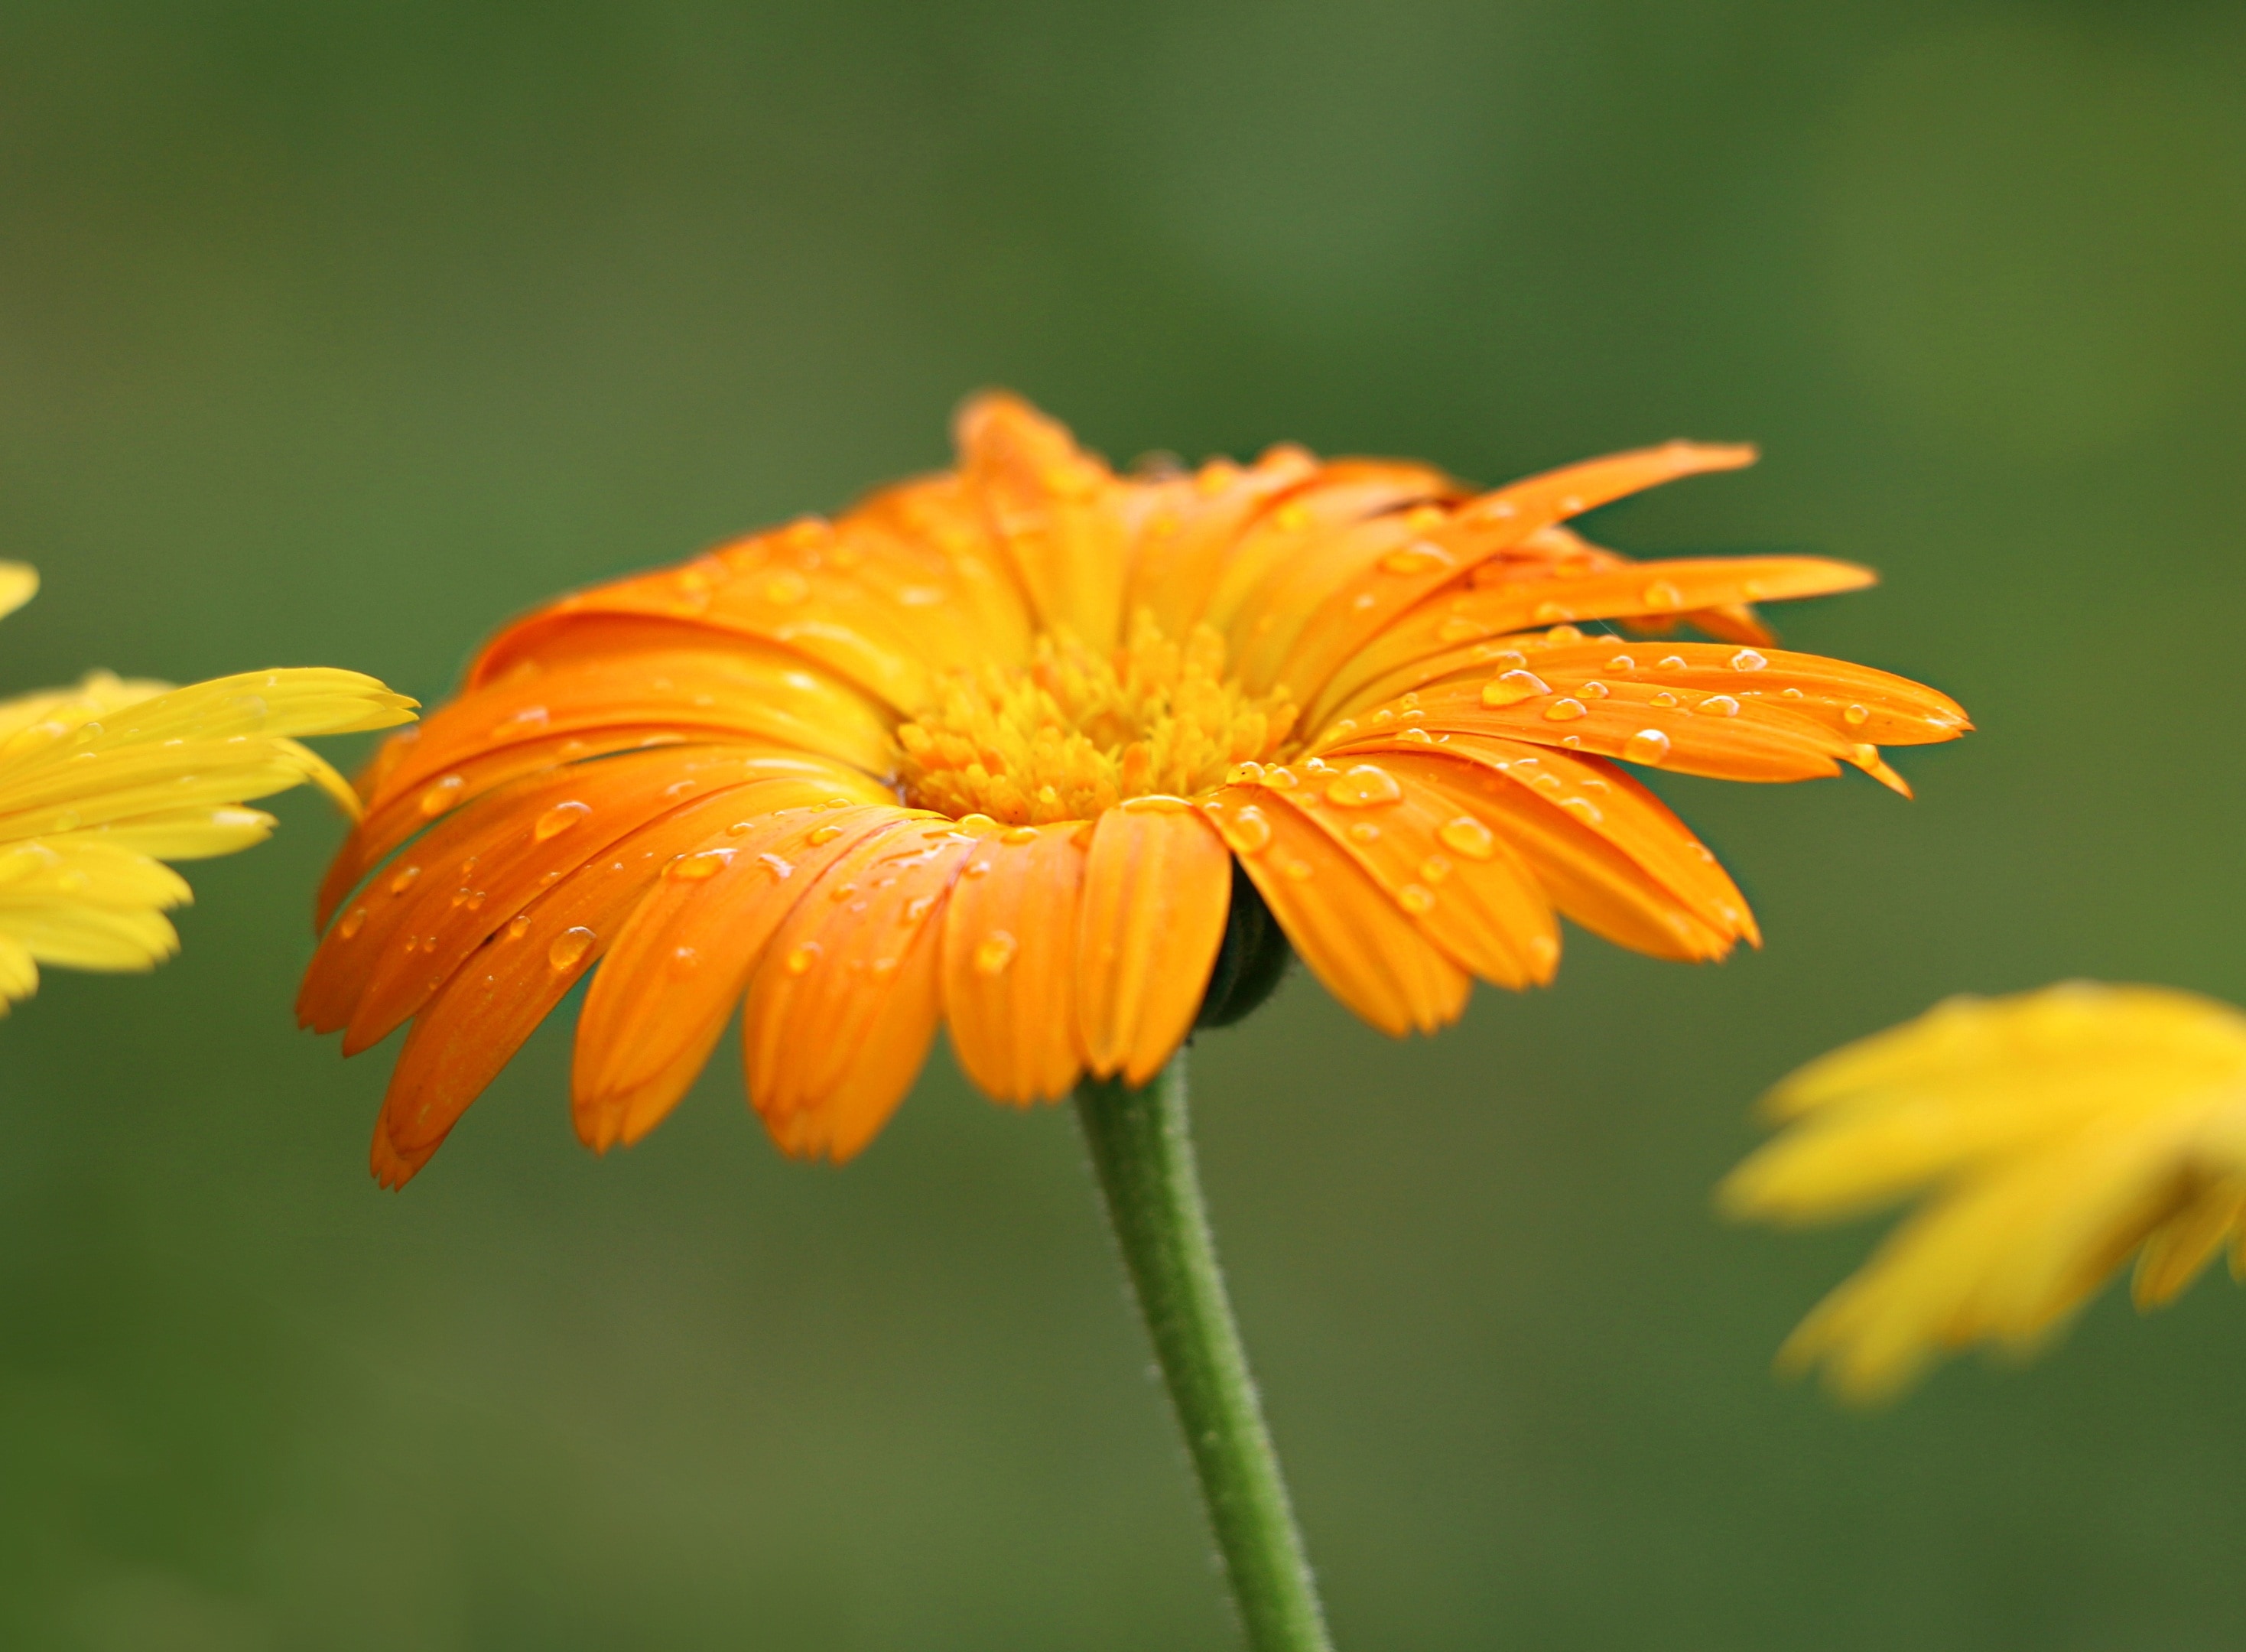 orange daisy